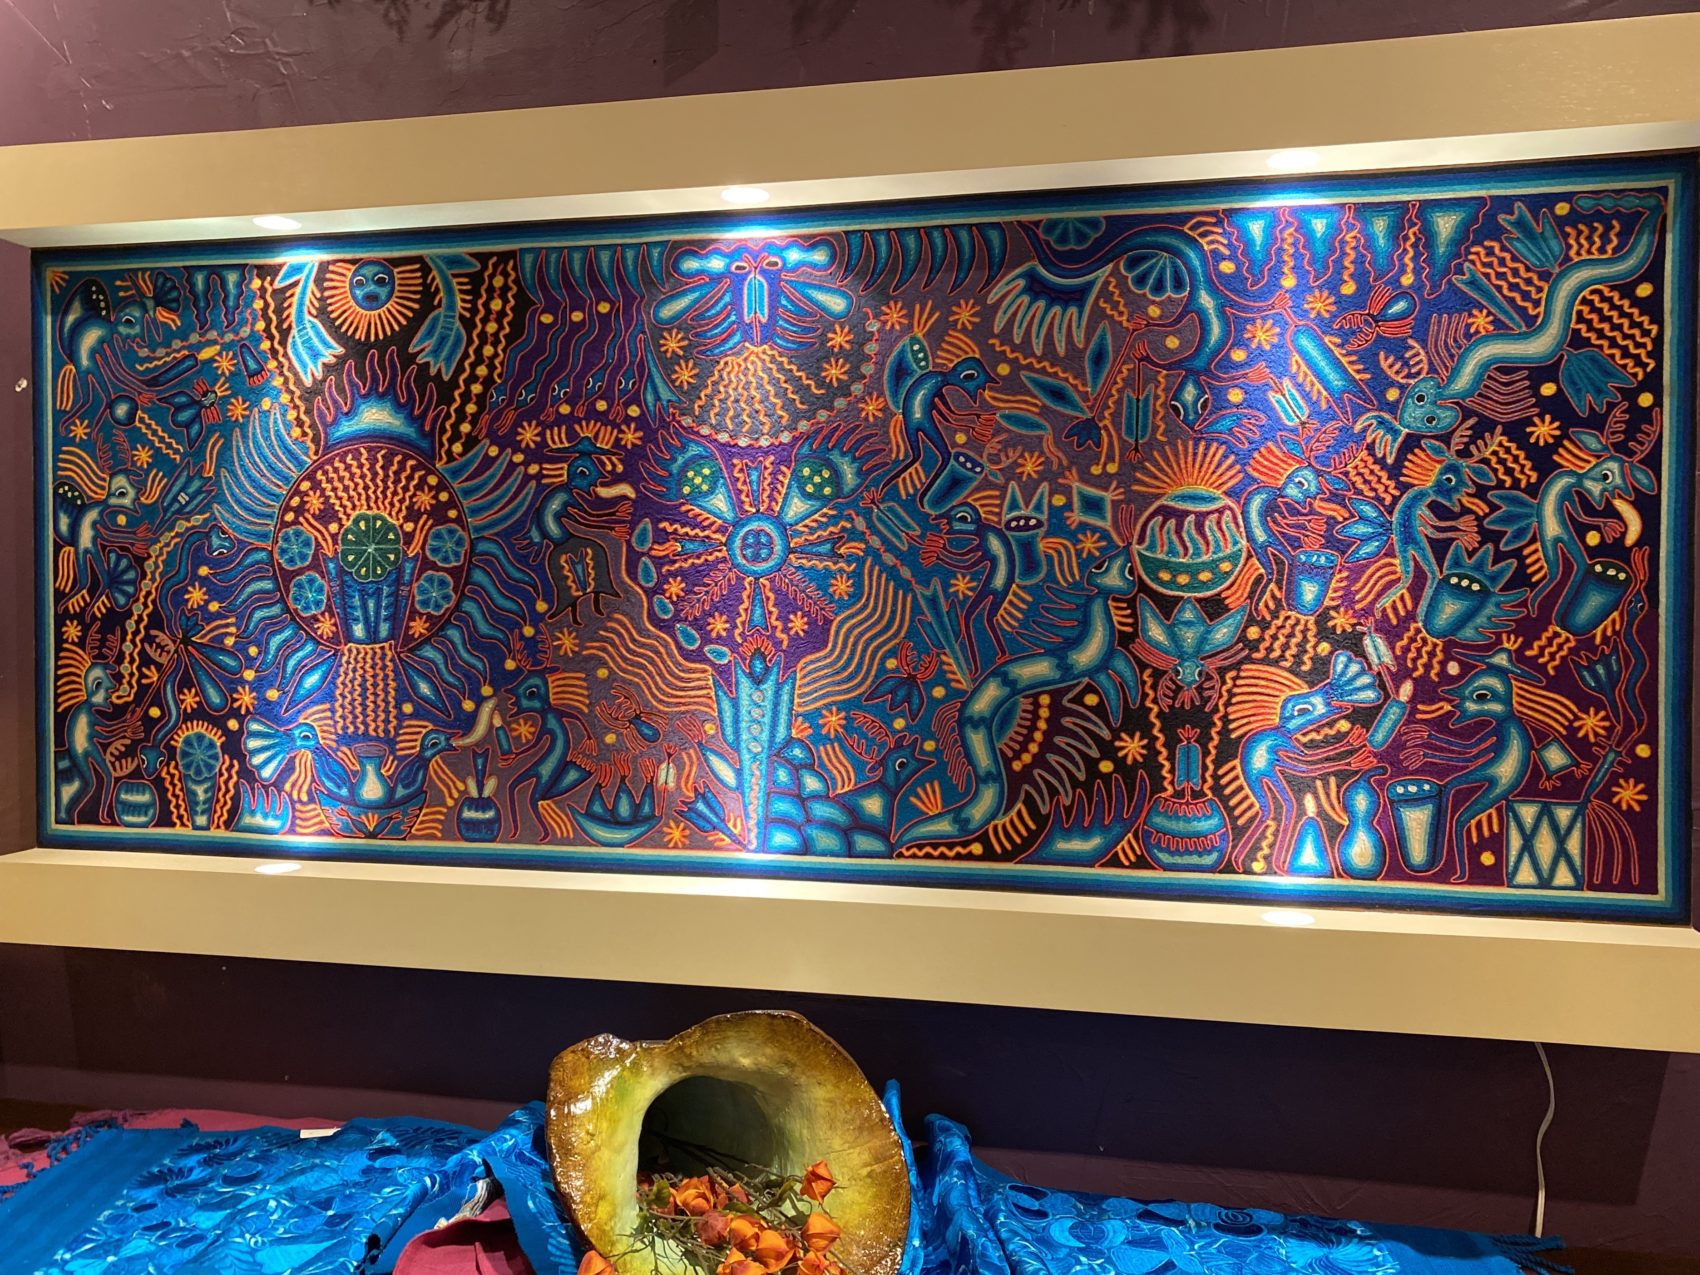 Huichol Yarn Wall Art: "Bliss"